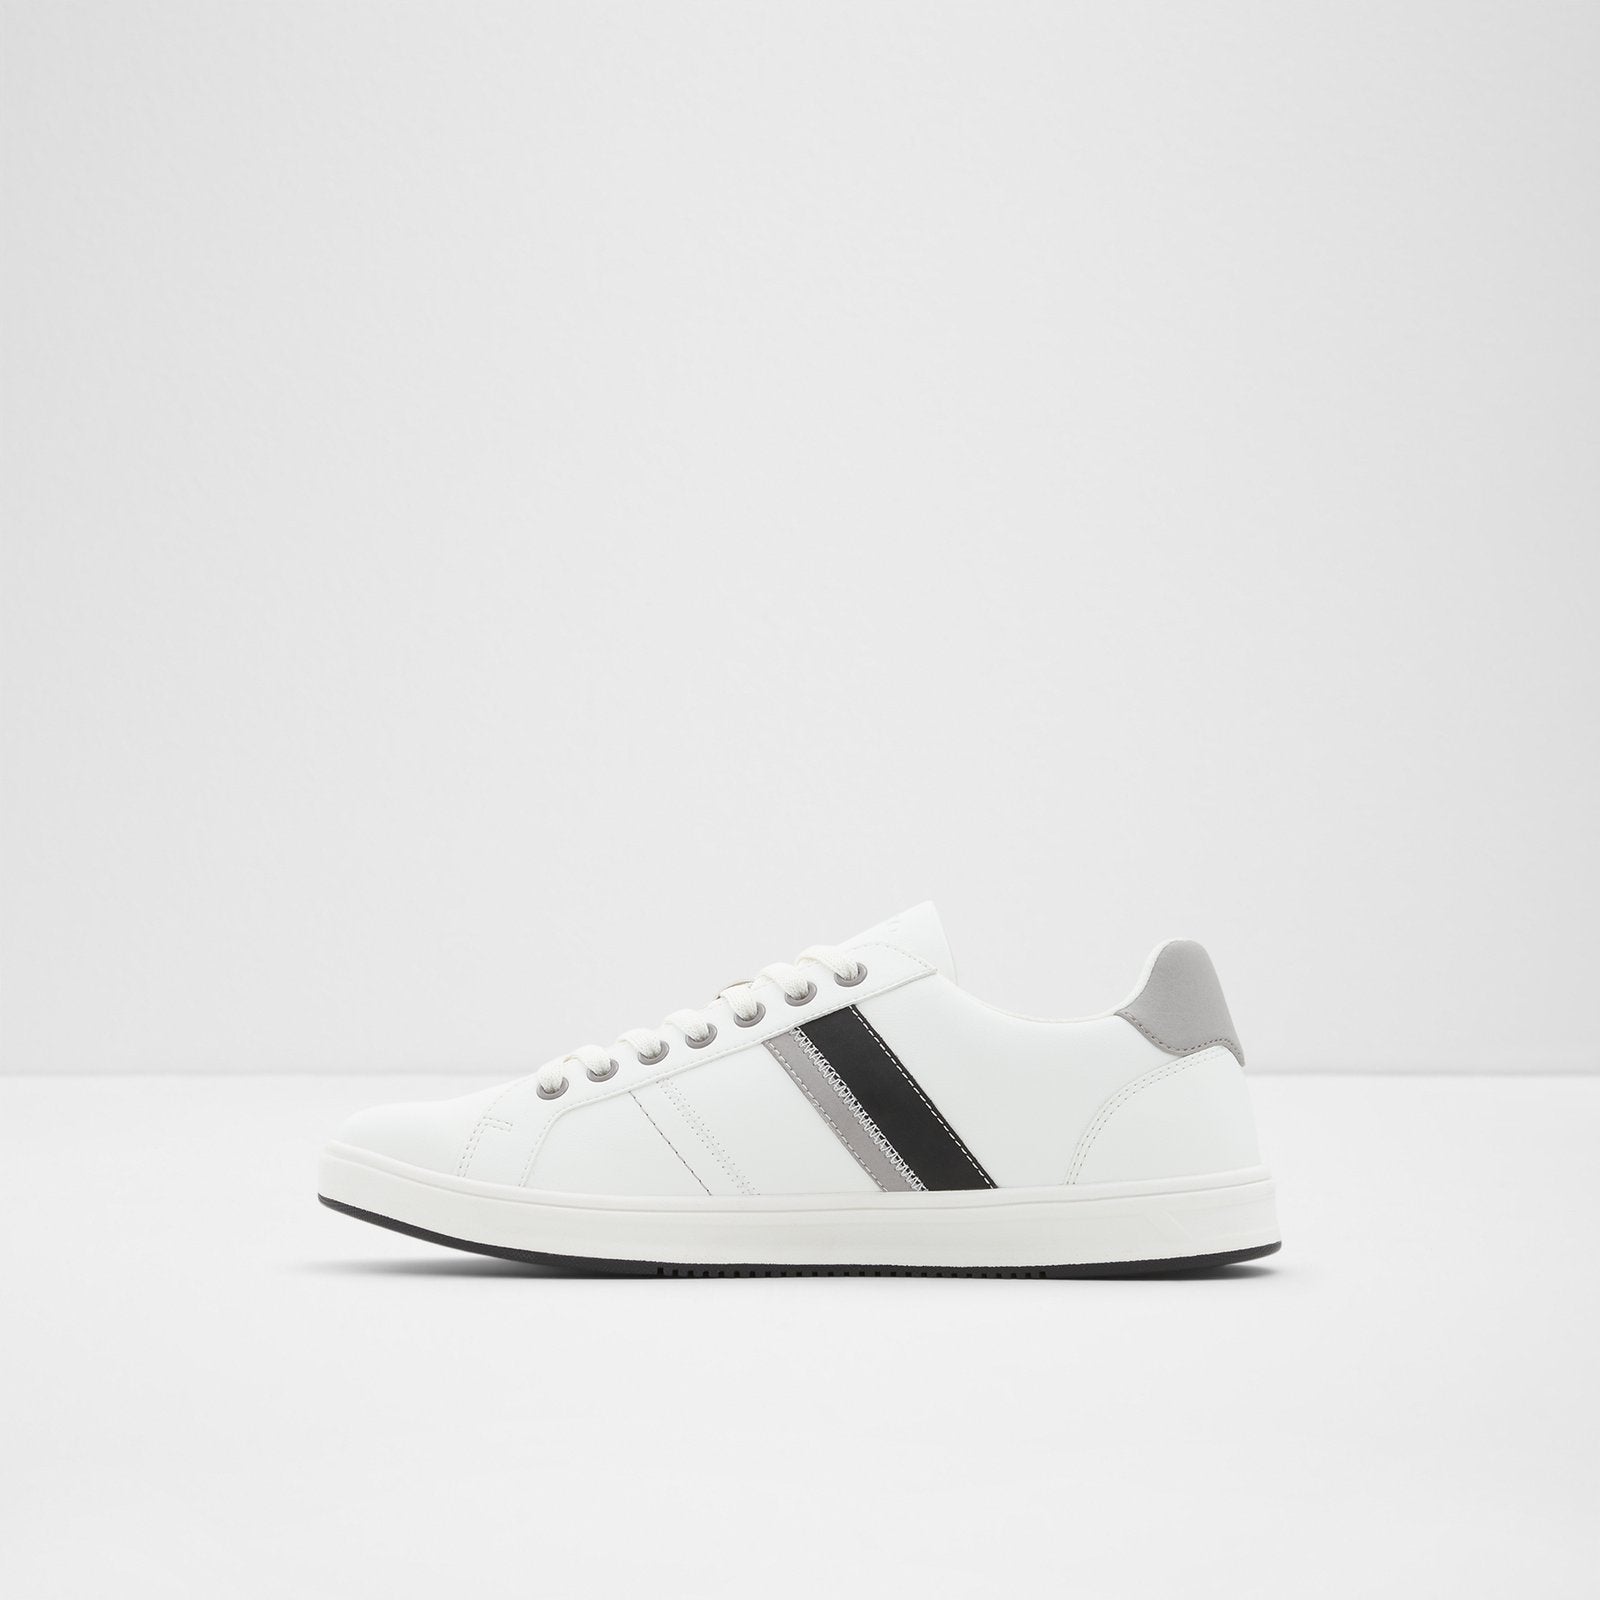 Citywalk Men Shoes - White - ALDO KSA